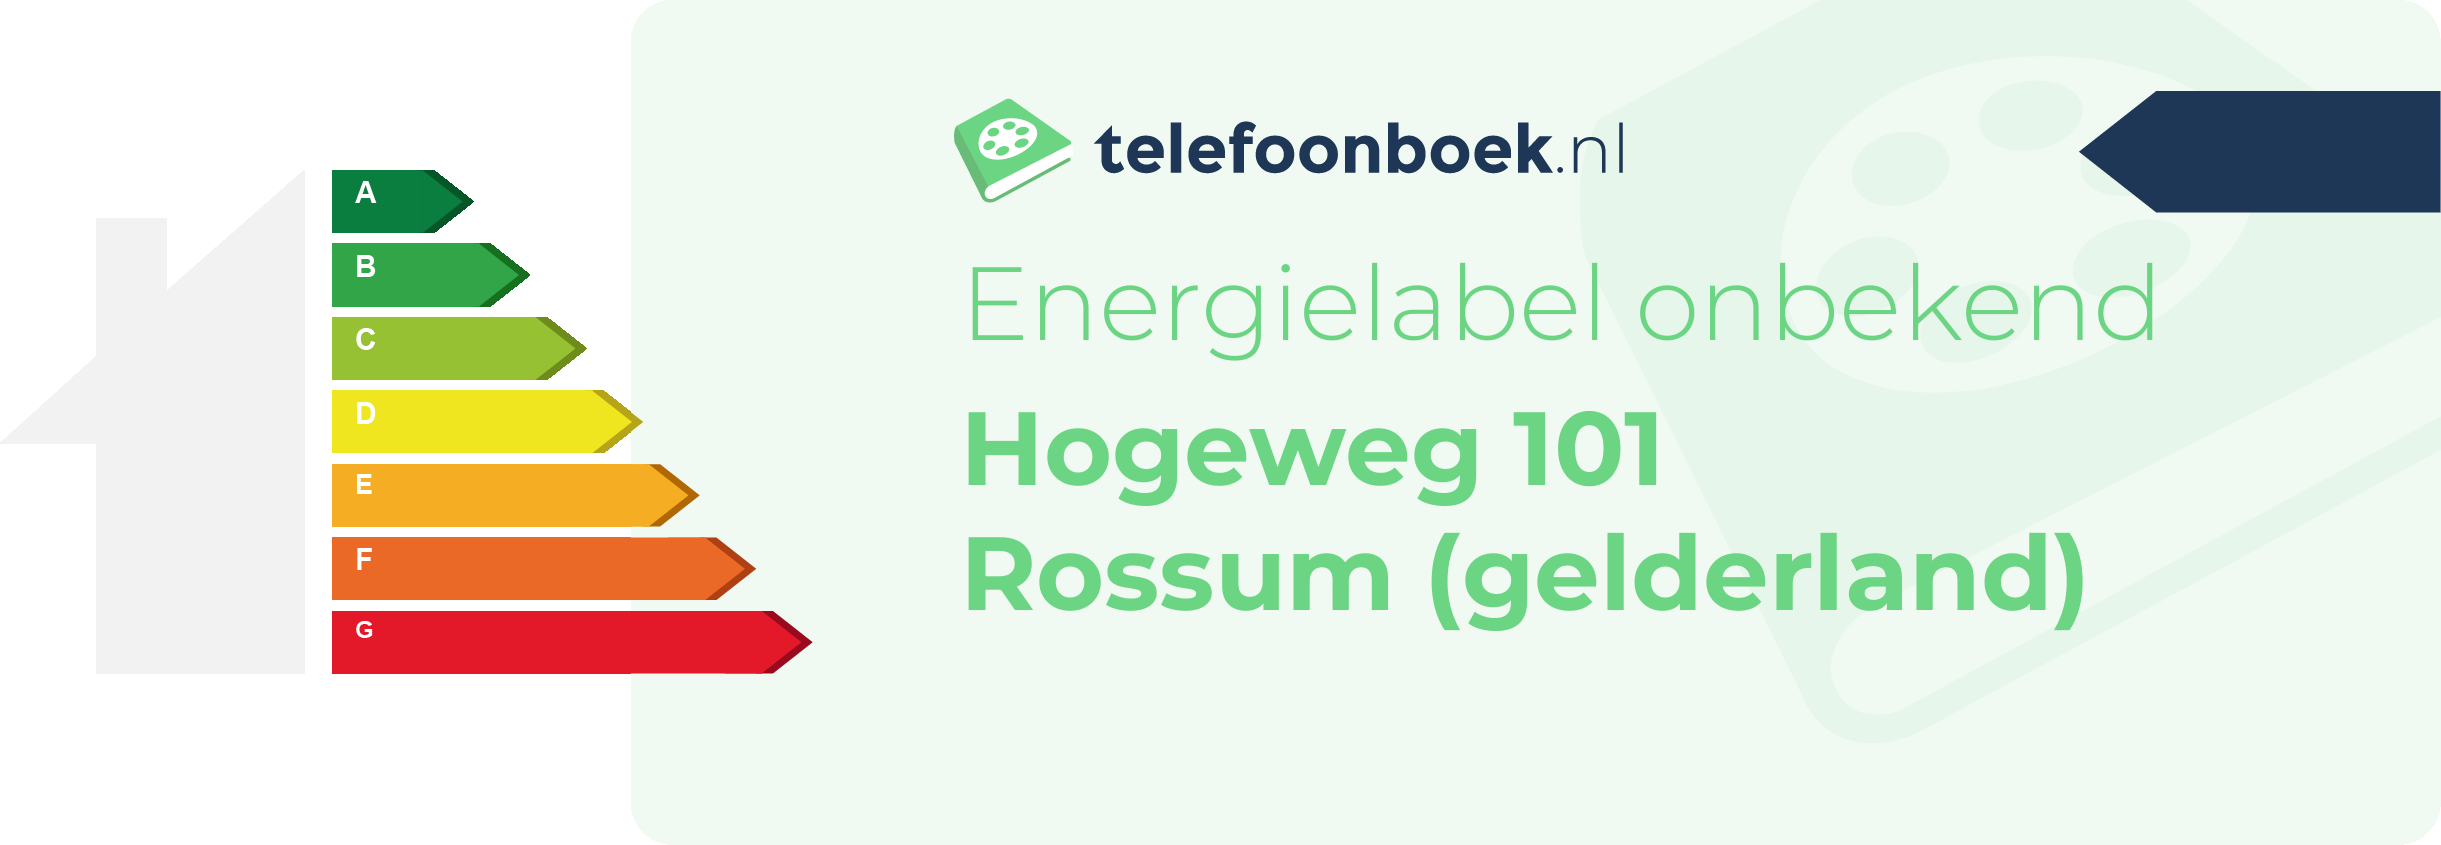 Energielabel Hogeweg 101 Rossum (Gelderland)